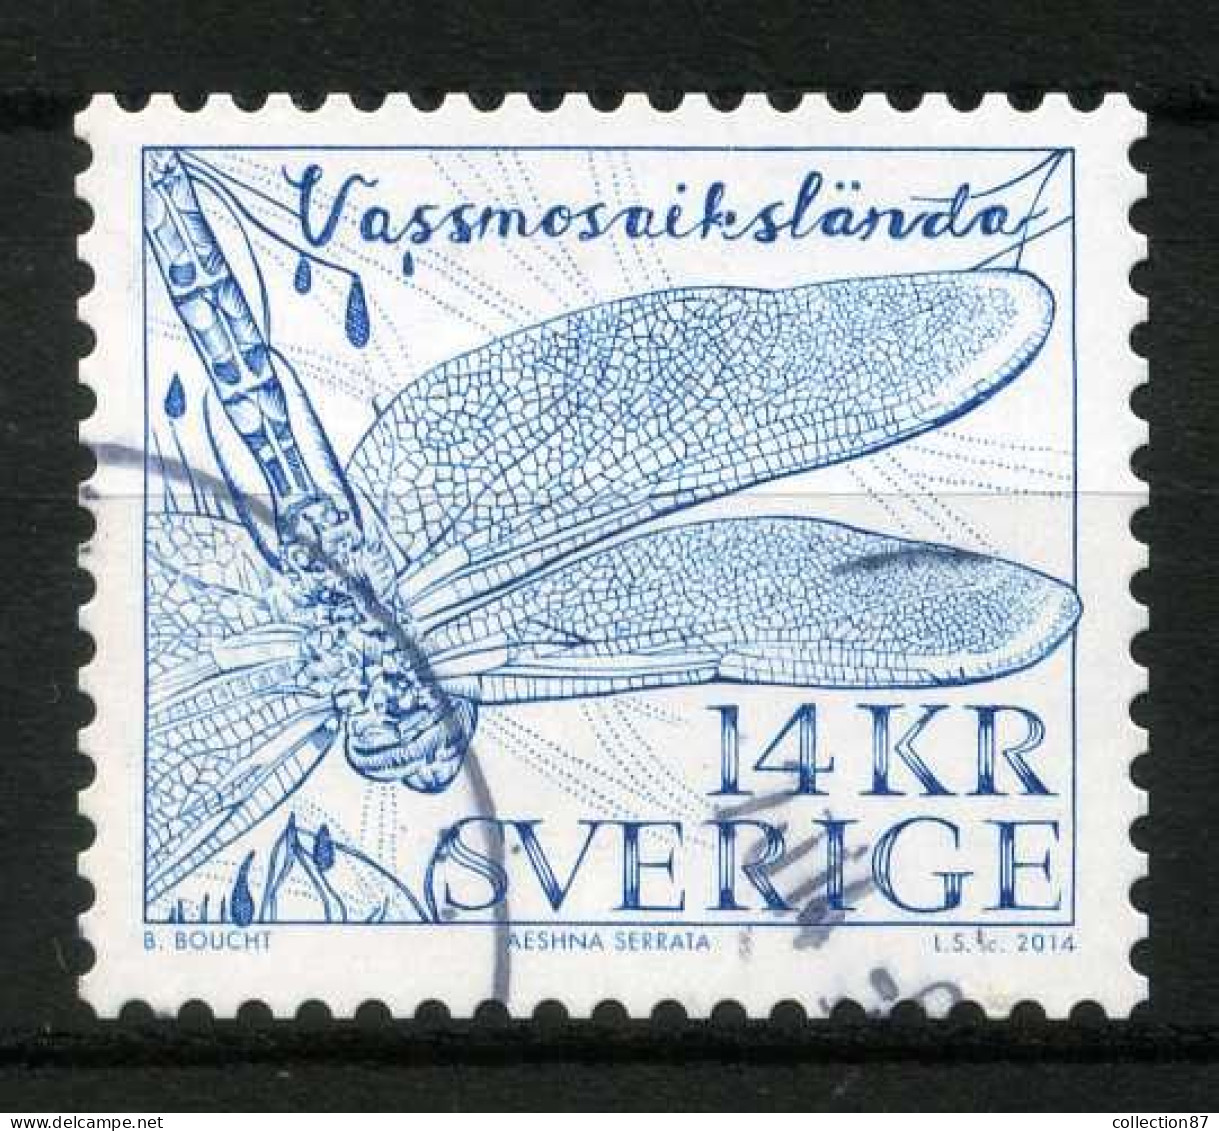 Réf 77 < -- SWEDEN 2014 < Yvert N° 2967 Ø Used -- > Insectes Aeshna Serrata - Gebruikt